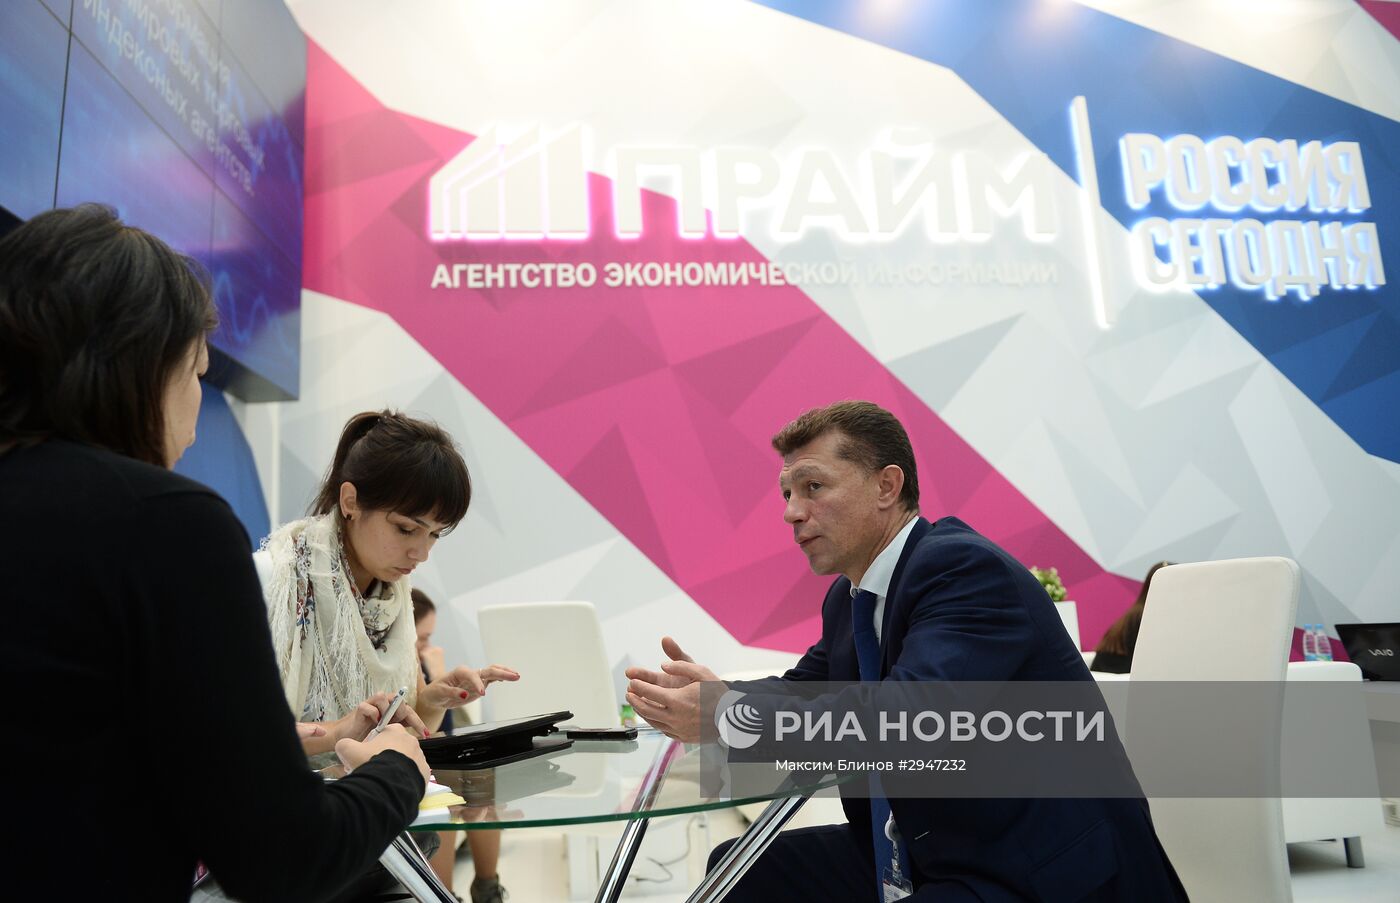 Международный инвестиционный форум "Сочи 2016"